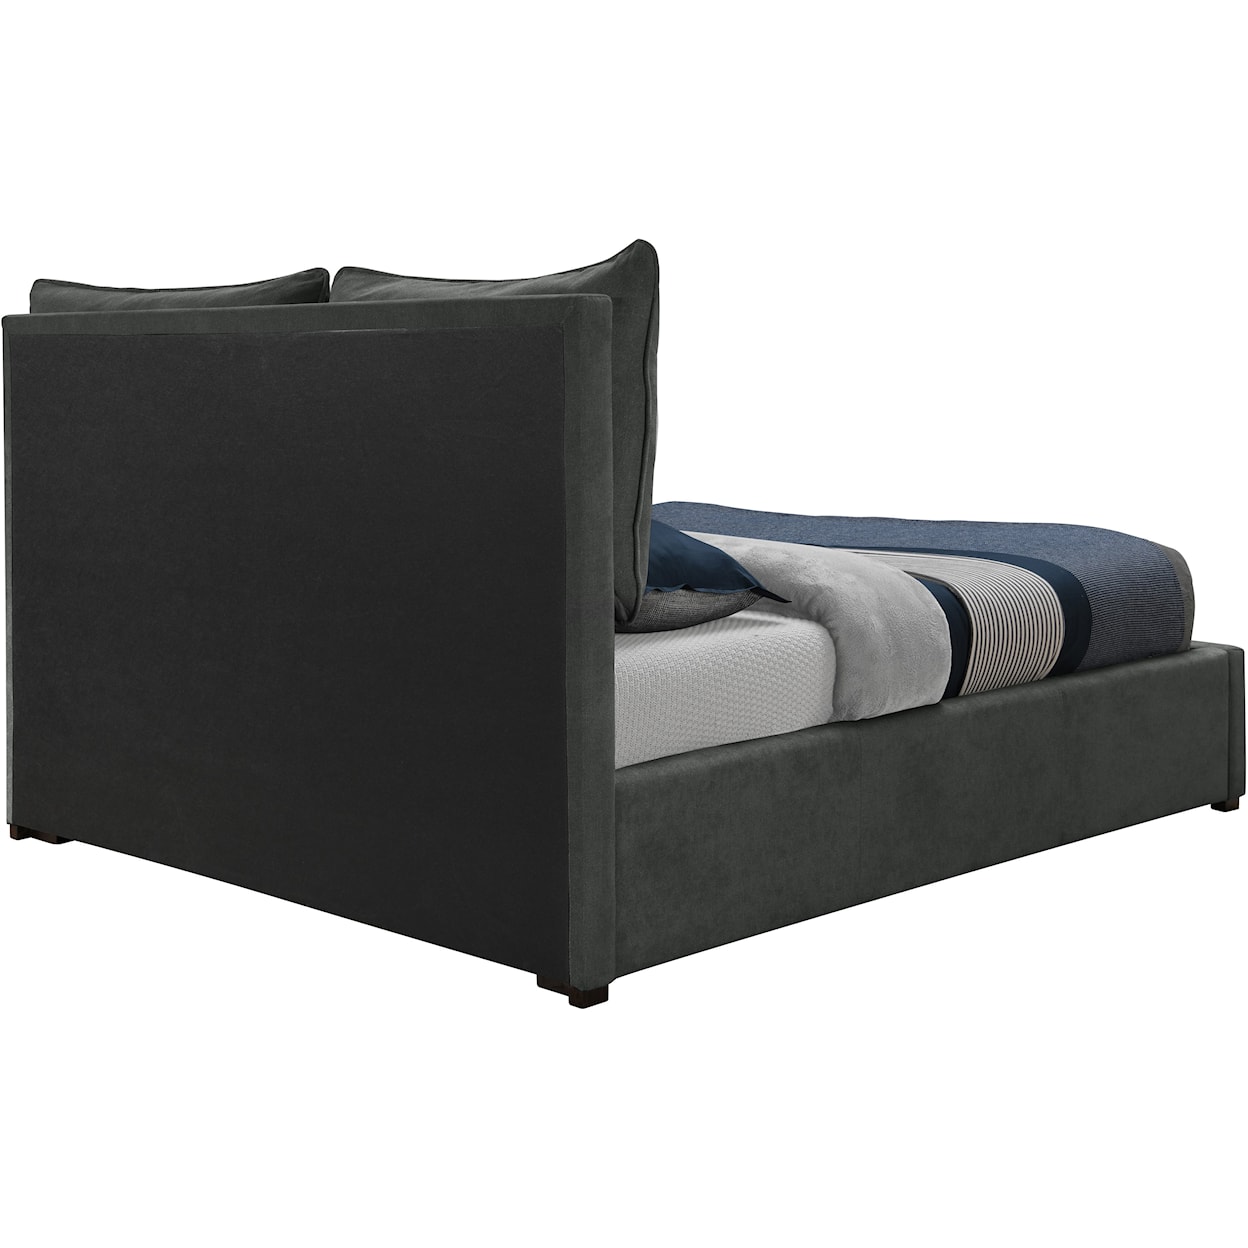 Meridian Furniture Misha Queen Bed (3 Boxes)